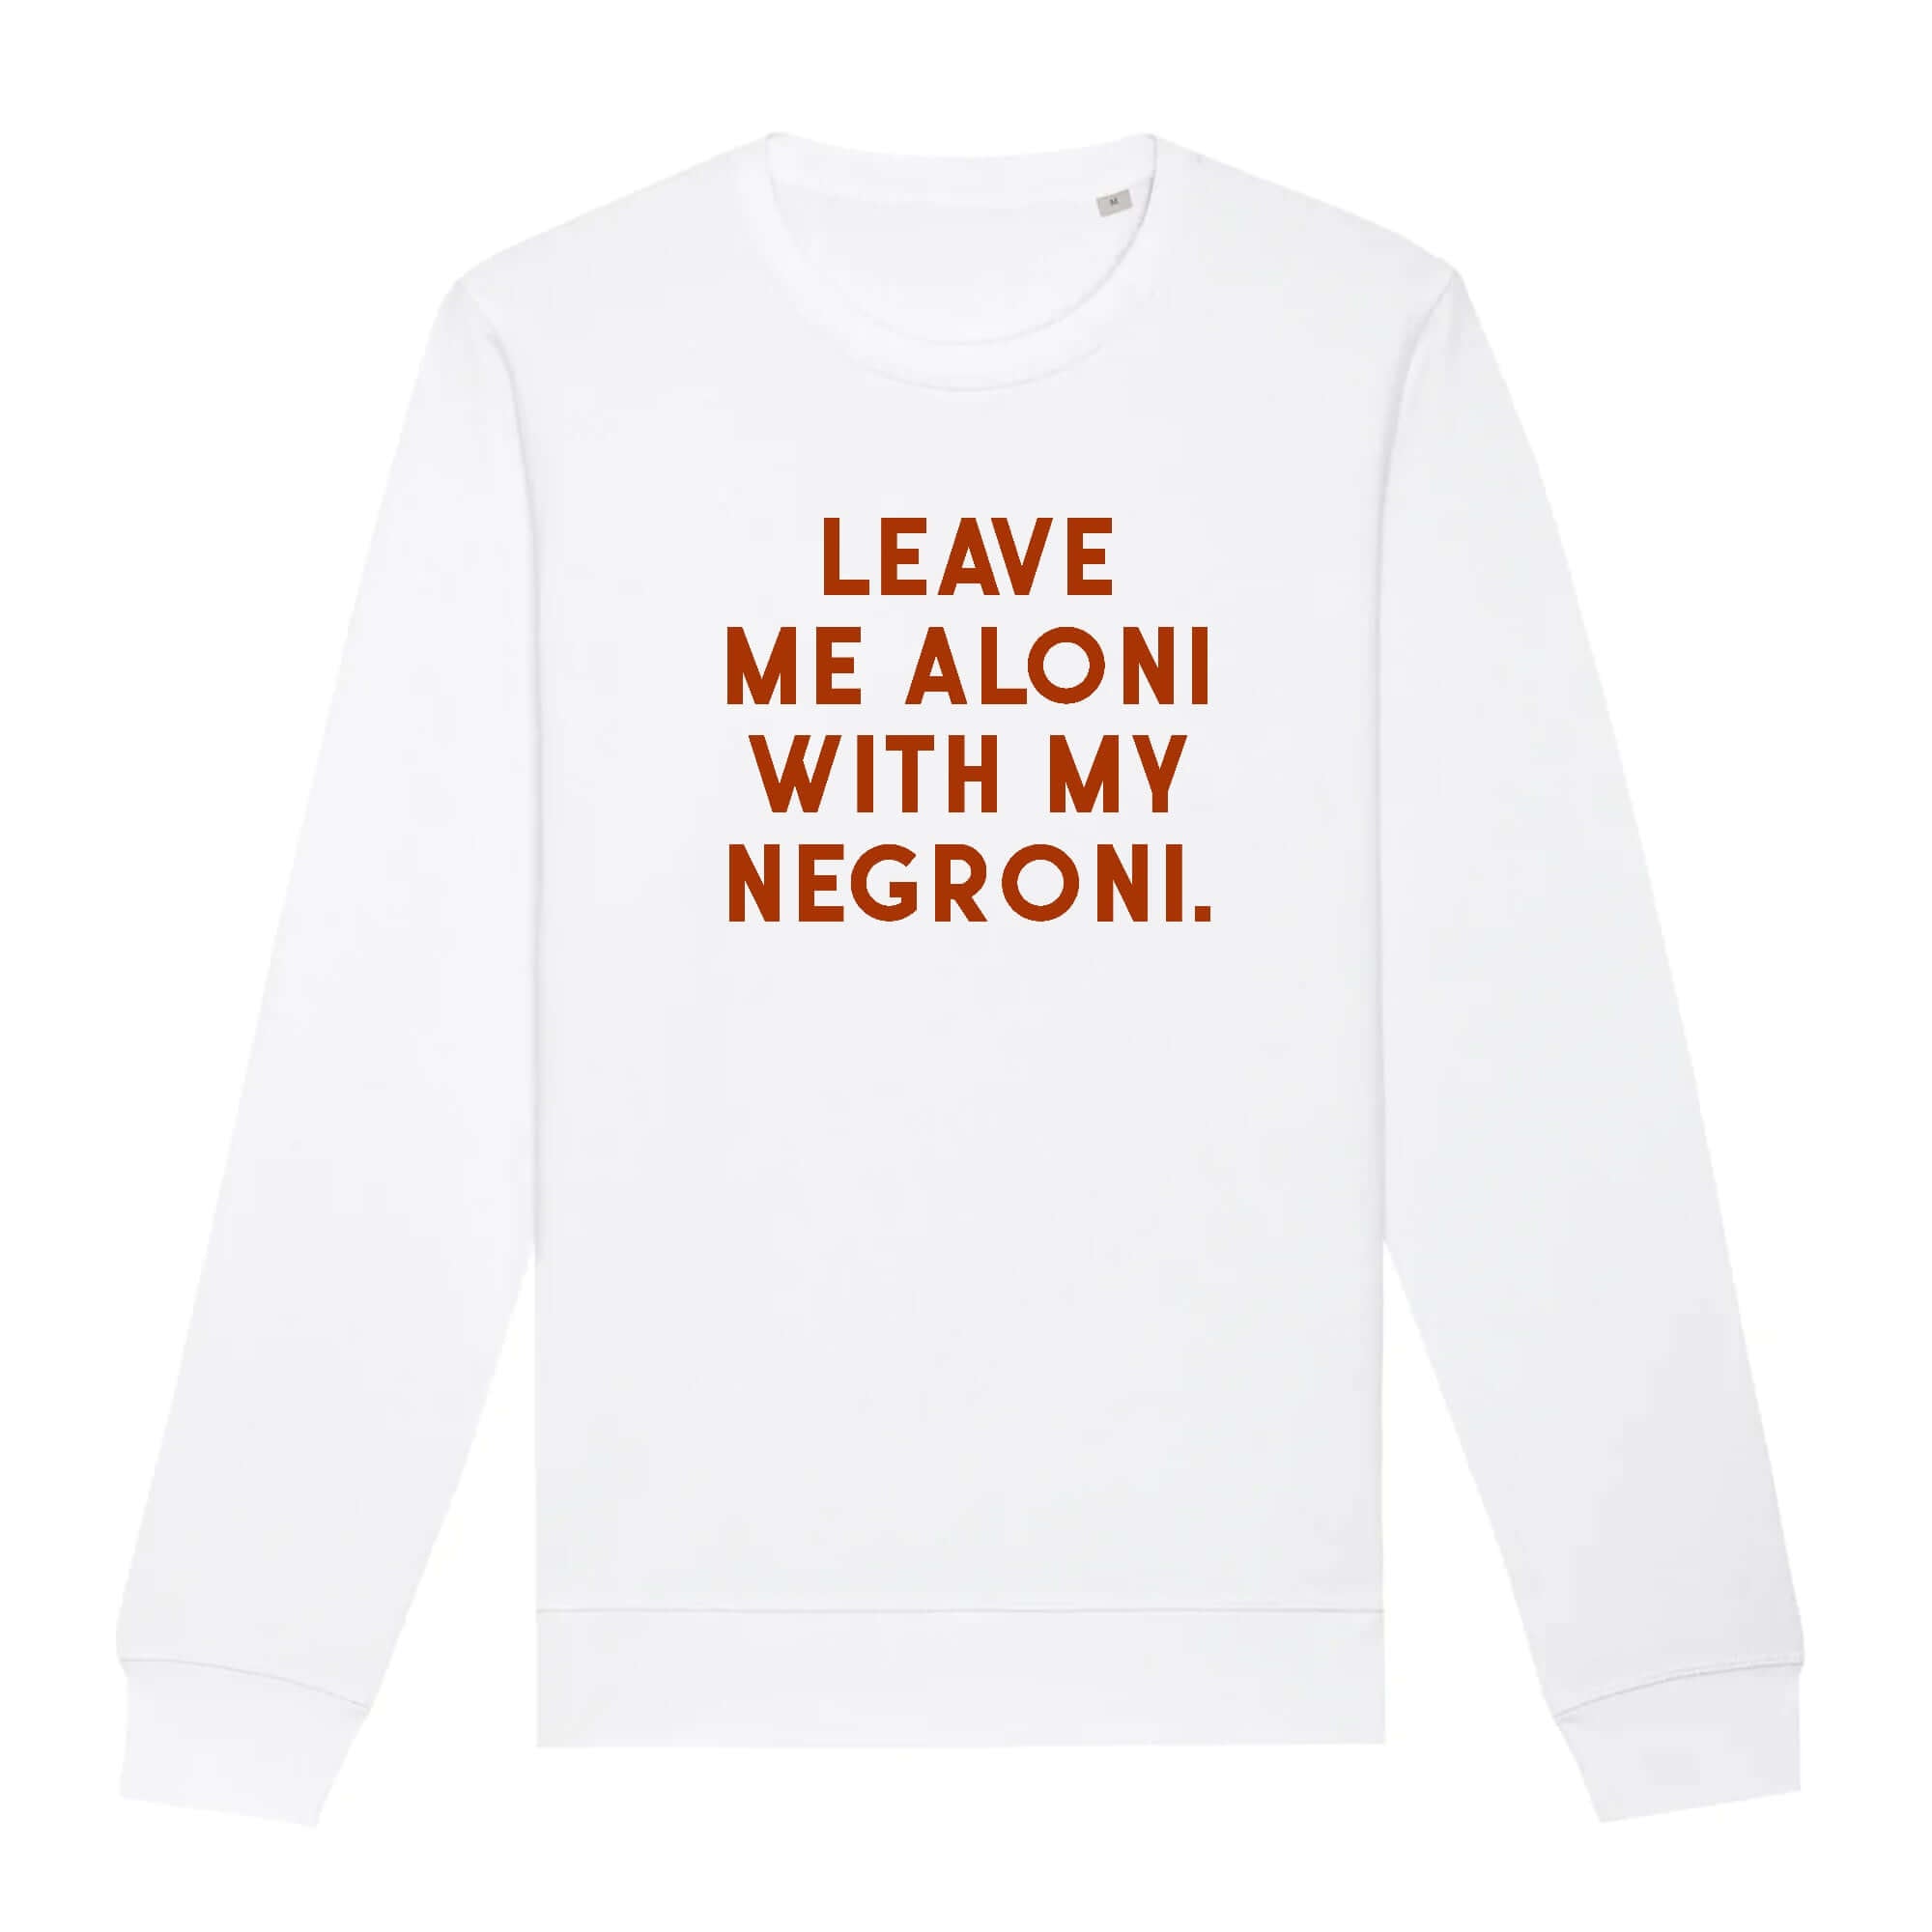 Leave me aloni with my Negroni - Organic Sweatshirt - The Refined Spirit